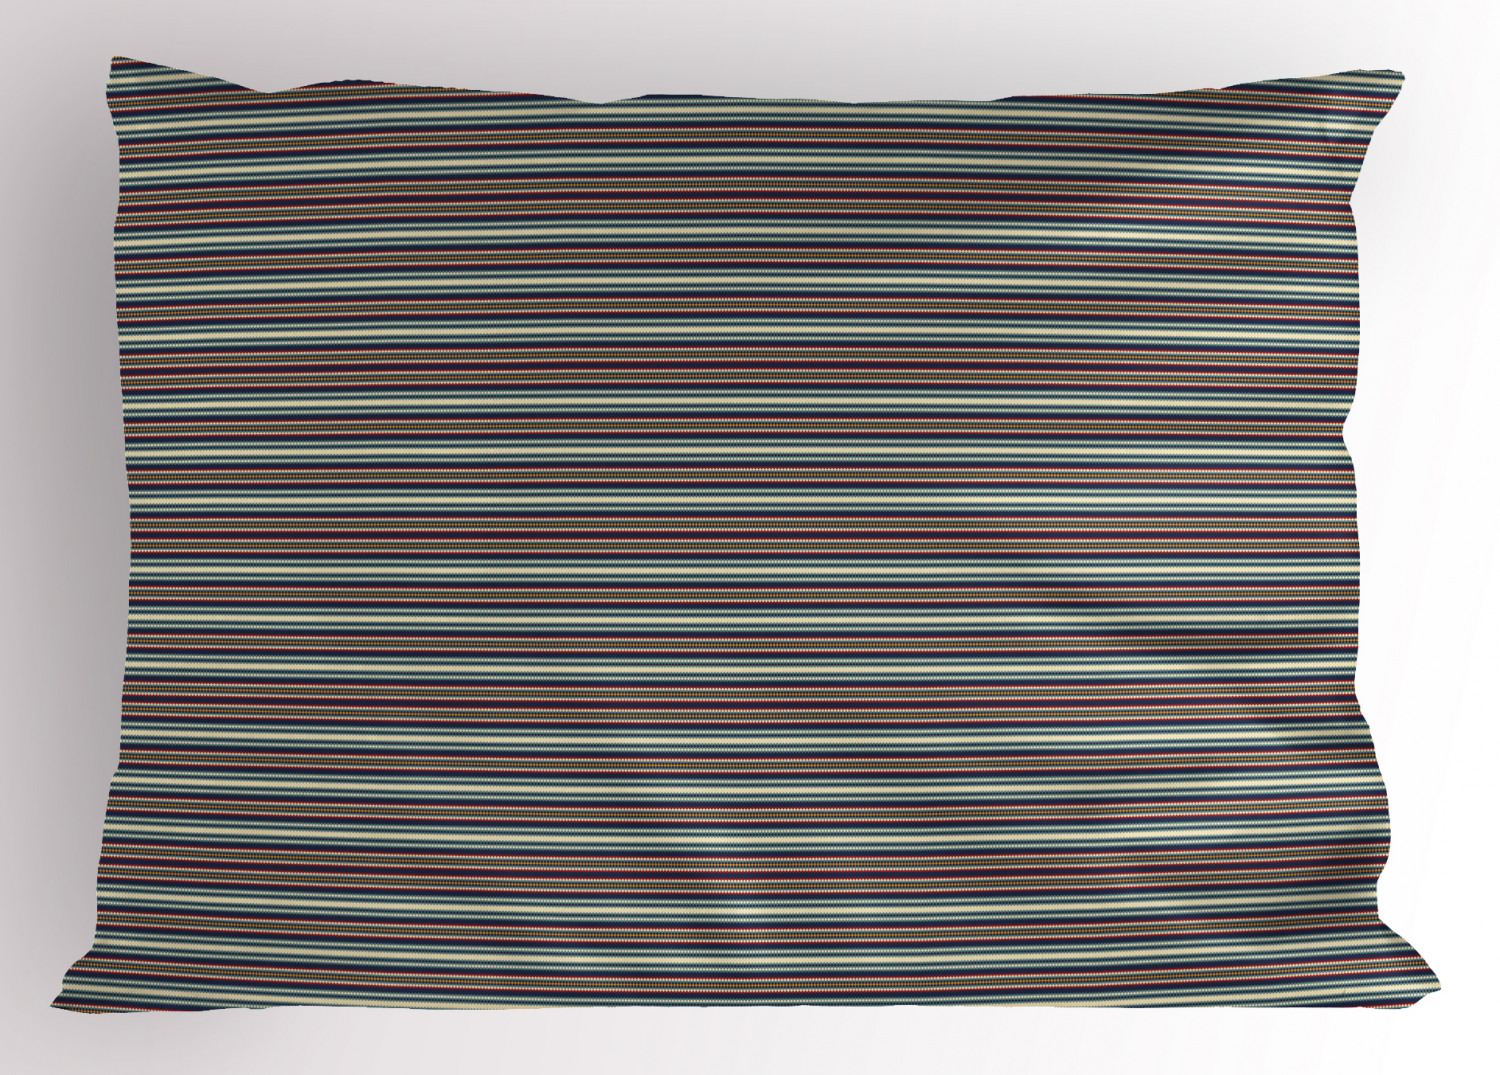 Details about   Vintage Drawing Pillow Sham Decorative Pillowcase 3 Sizes Bedroom Decoration 